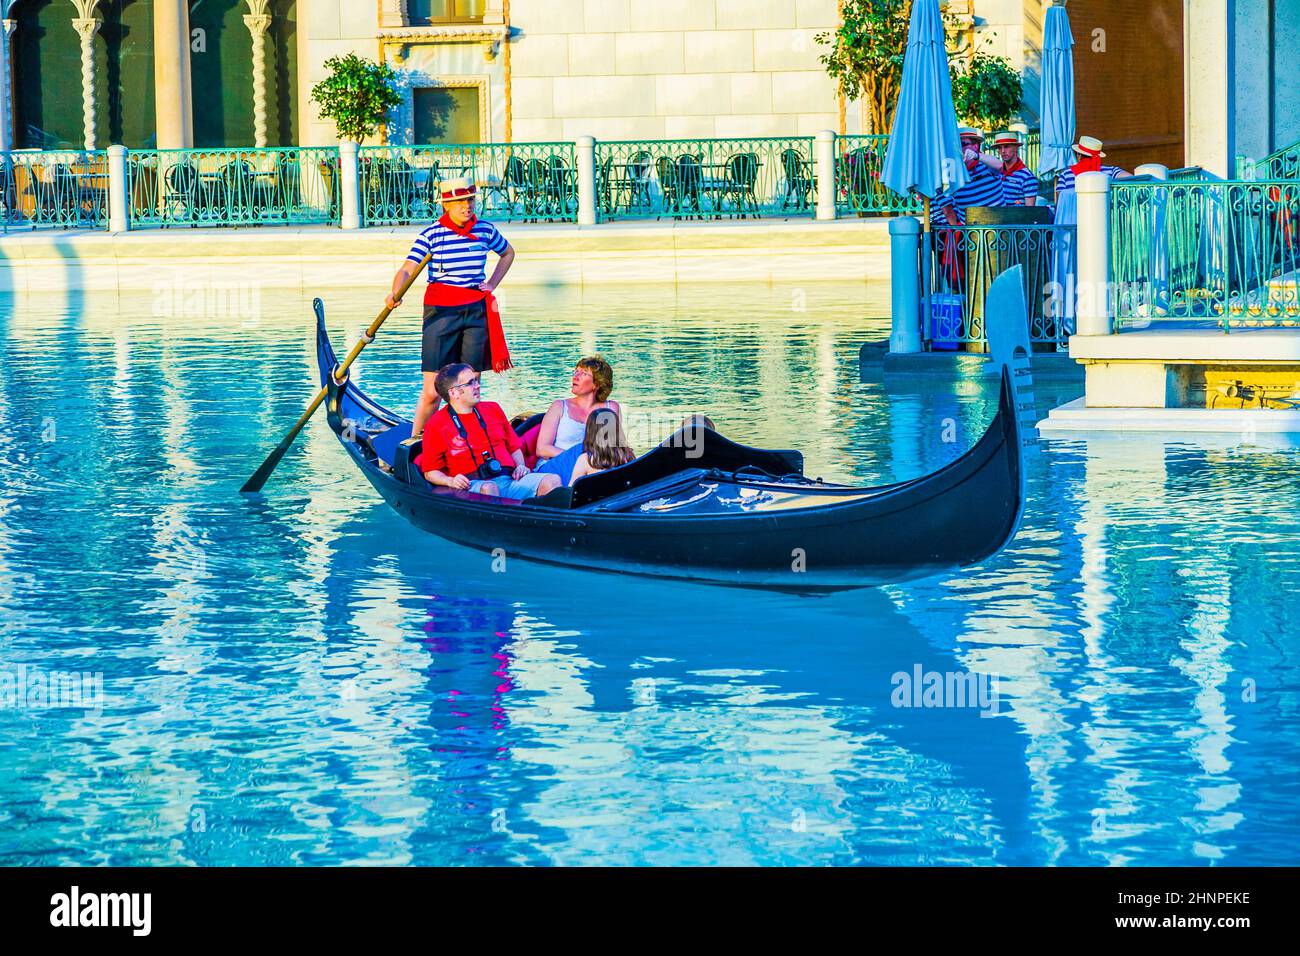 Venice Theme Venetian with Gondola on water and Caesars Casino Hotel, July 17, 2008 in Las Vegas, Nevada Stock Photo